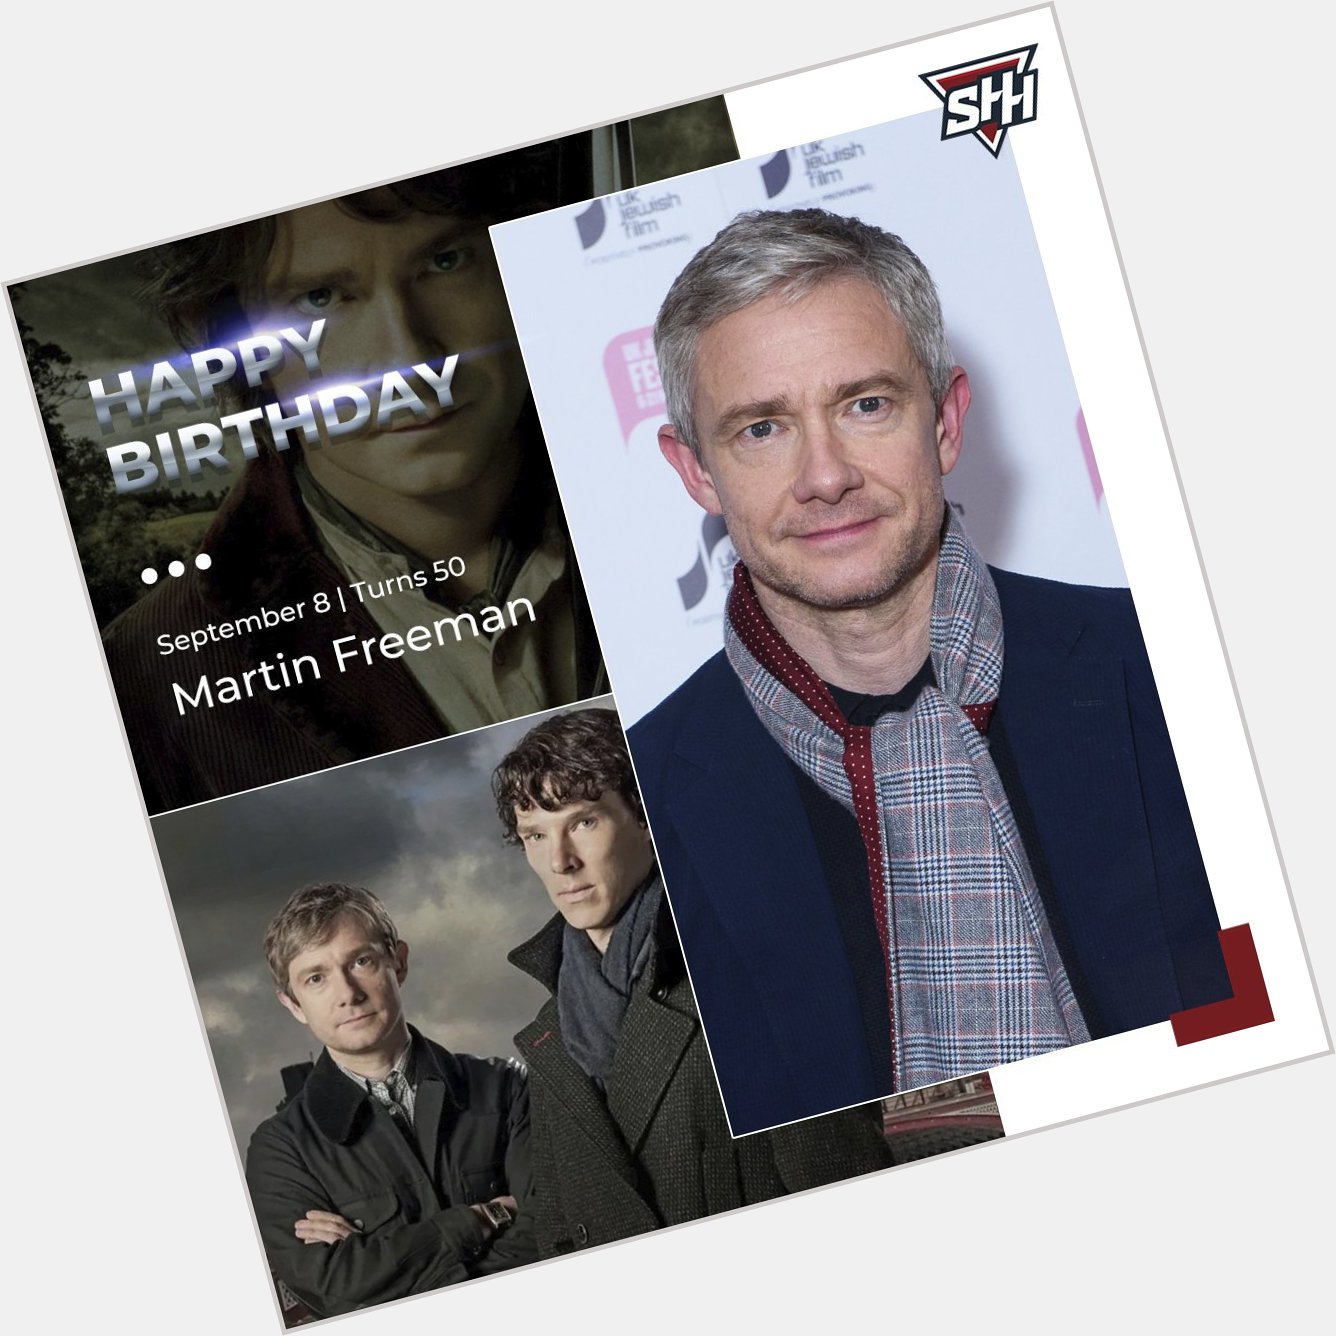 Happy Birthday to Martin Freeman! 